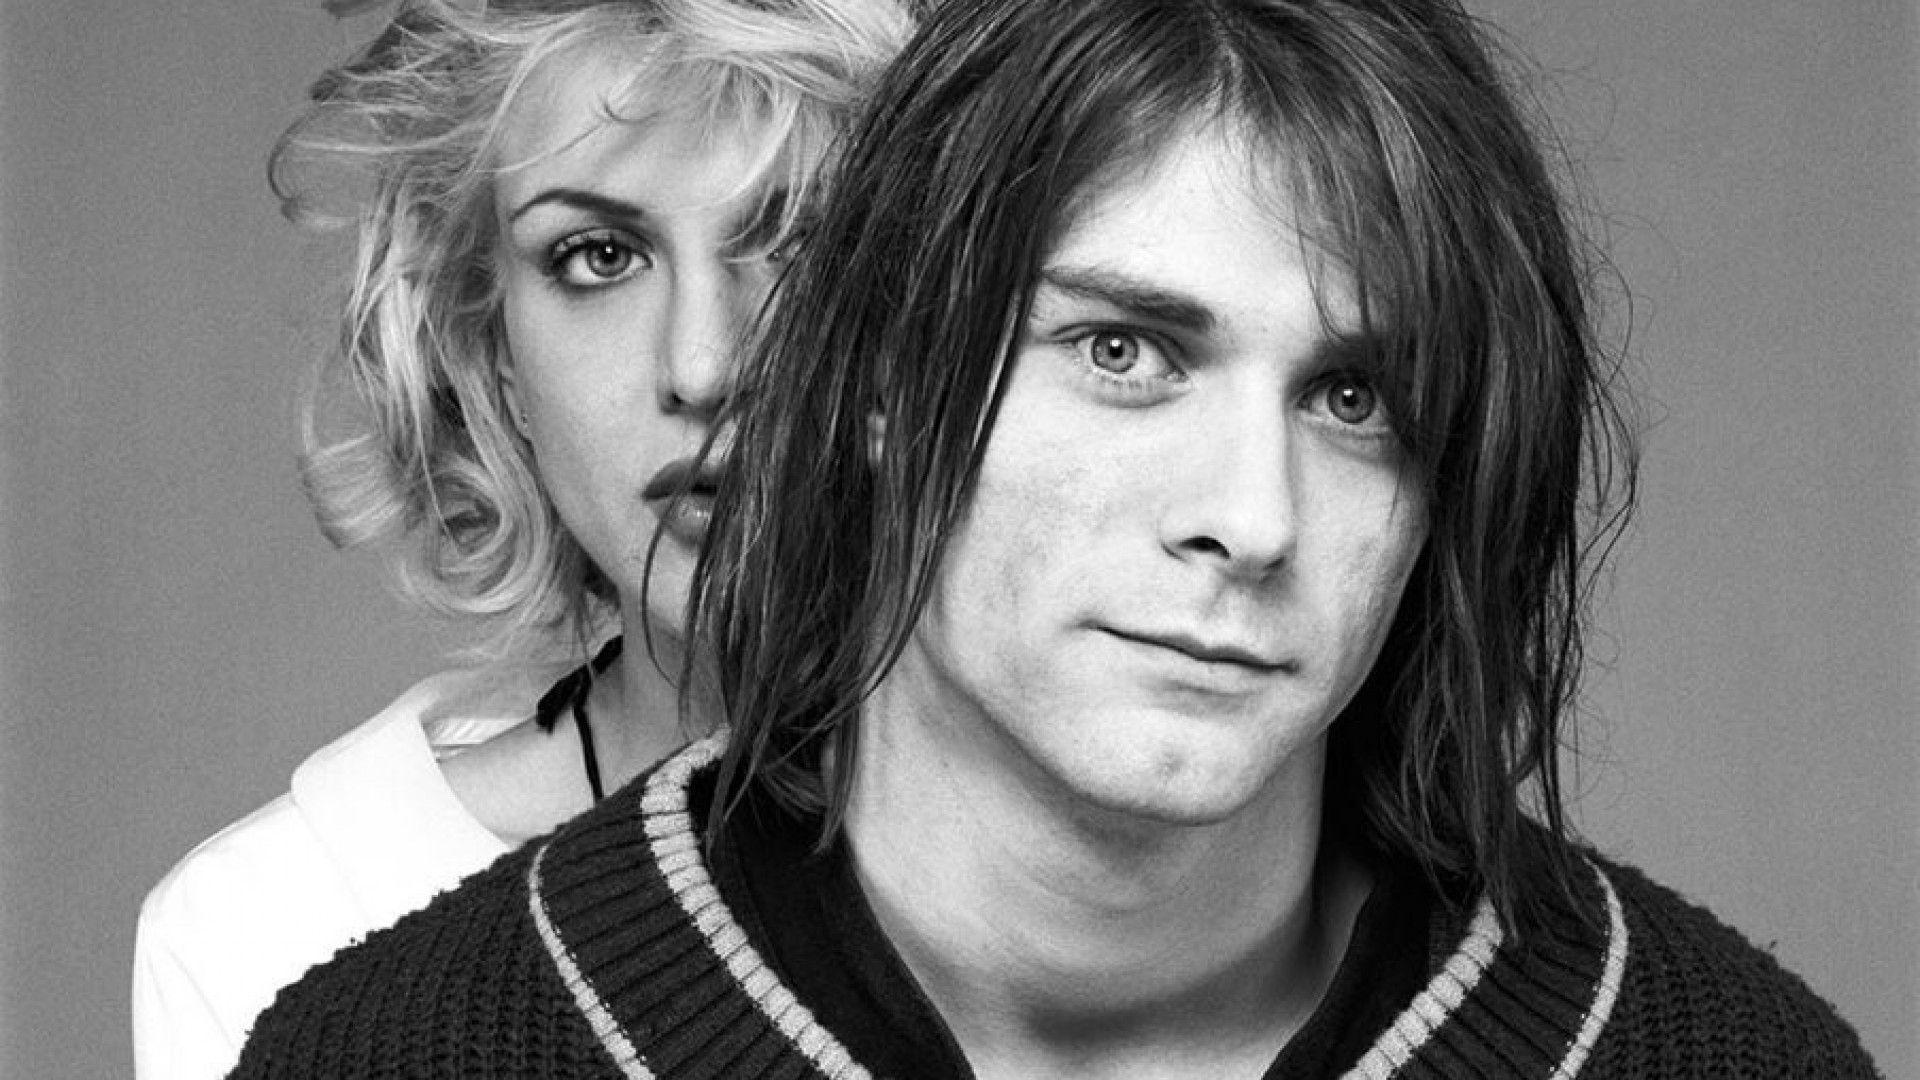 Kurt Cobain And Courtney Love HD Wallpaperx1080